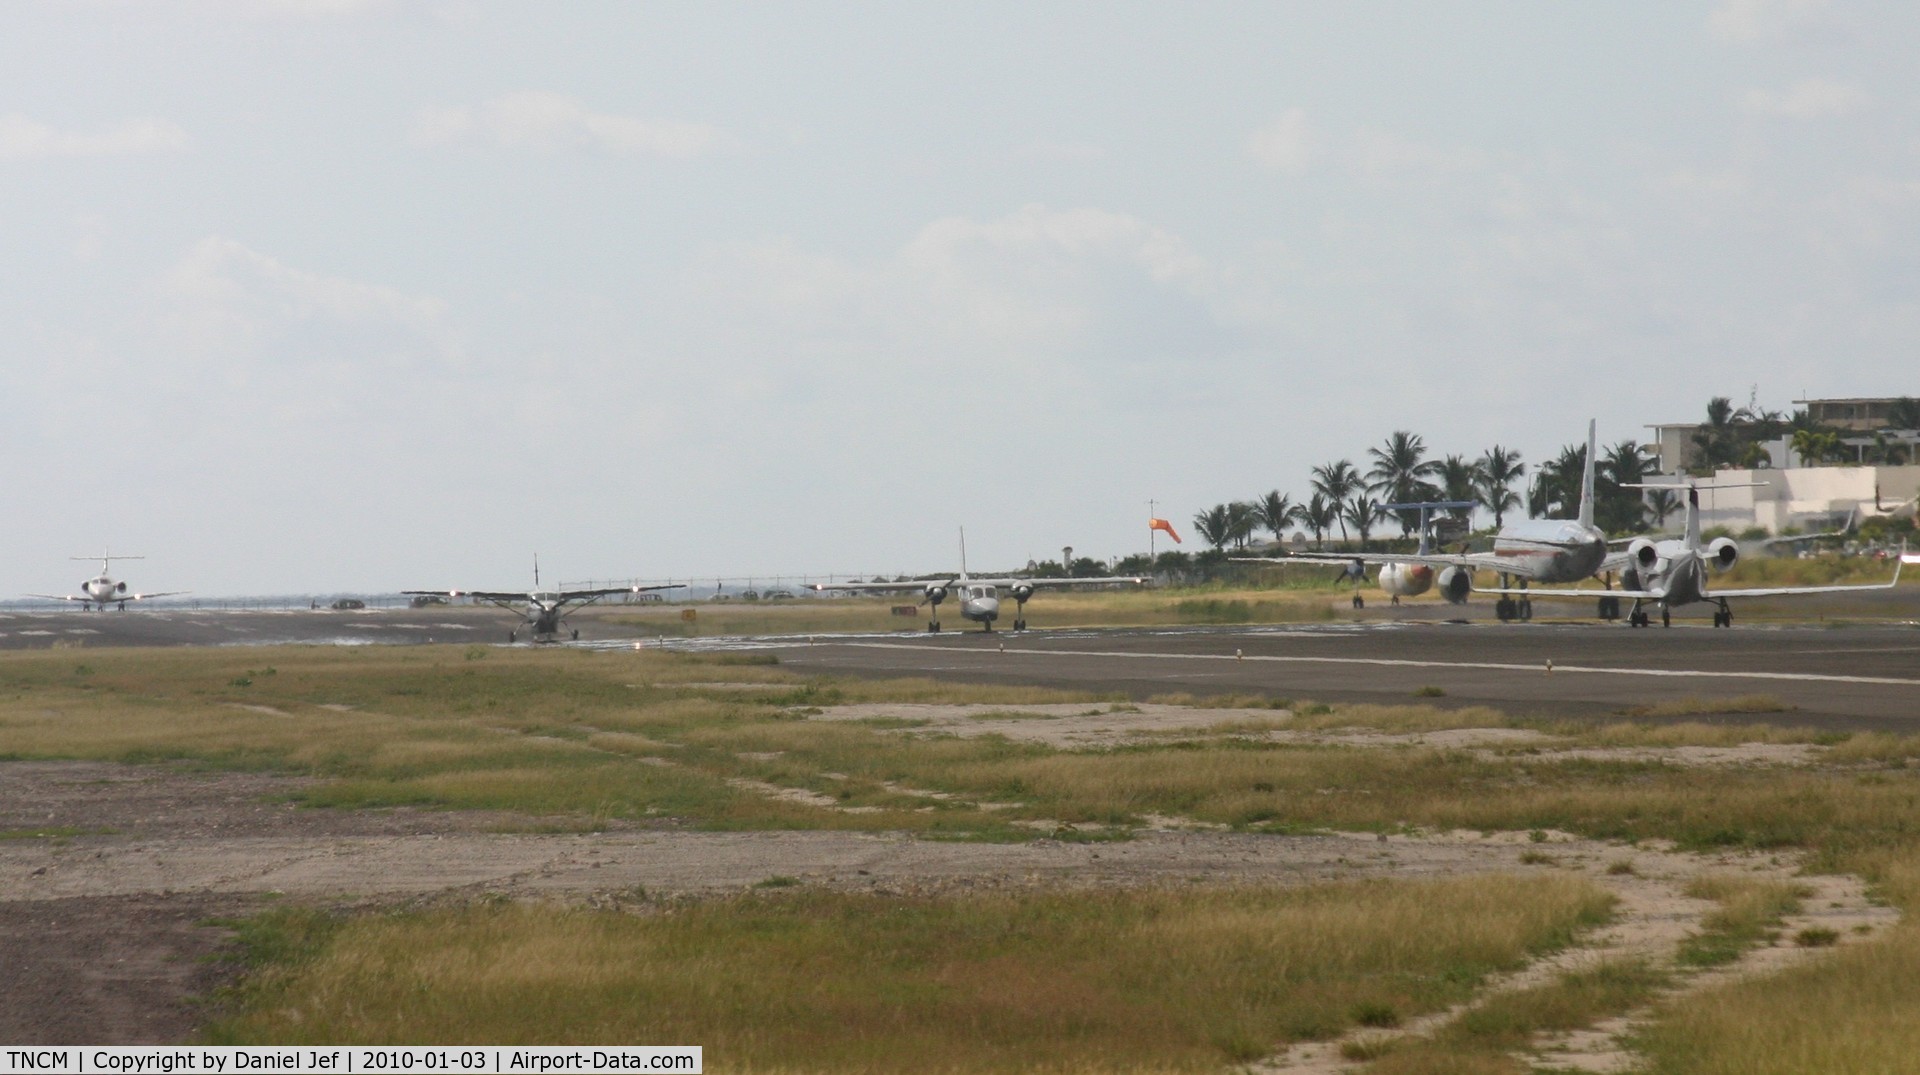 Princess Juliana International Airport, Philipsburg, Sint Maarten Netherlands Antilles (TNCM) - The active runway get real buzy at TNCM